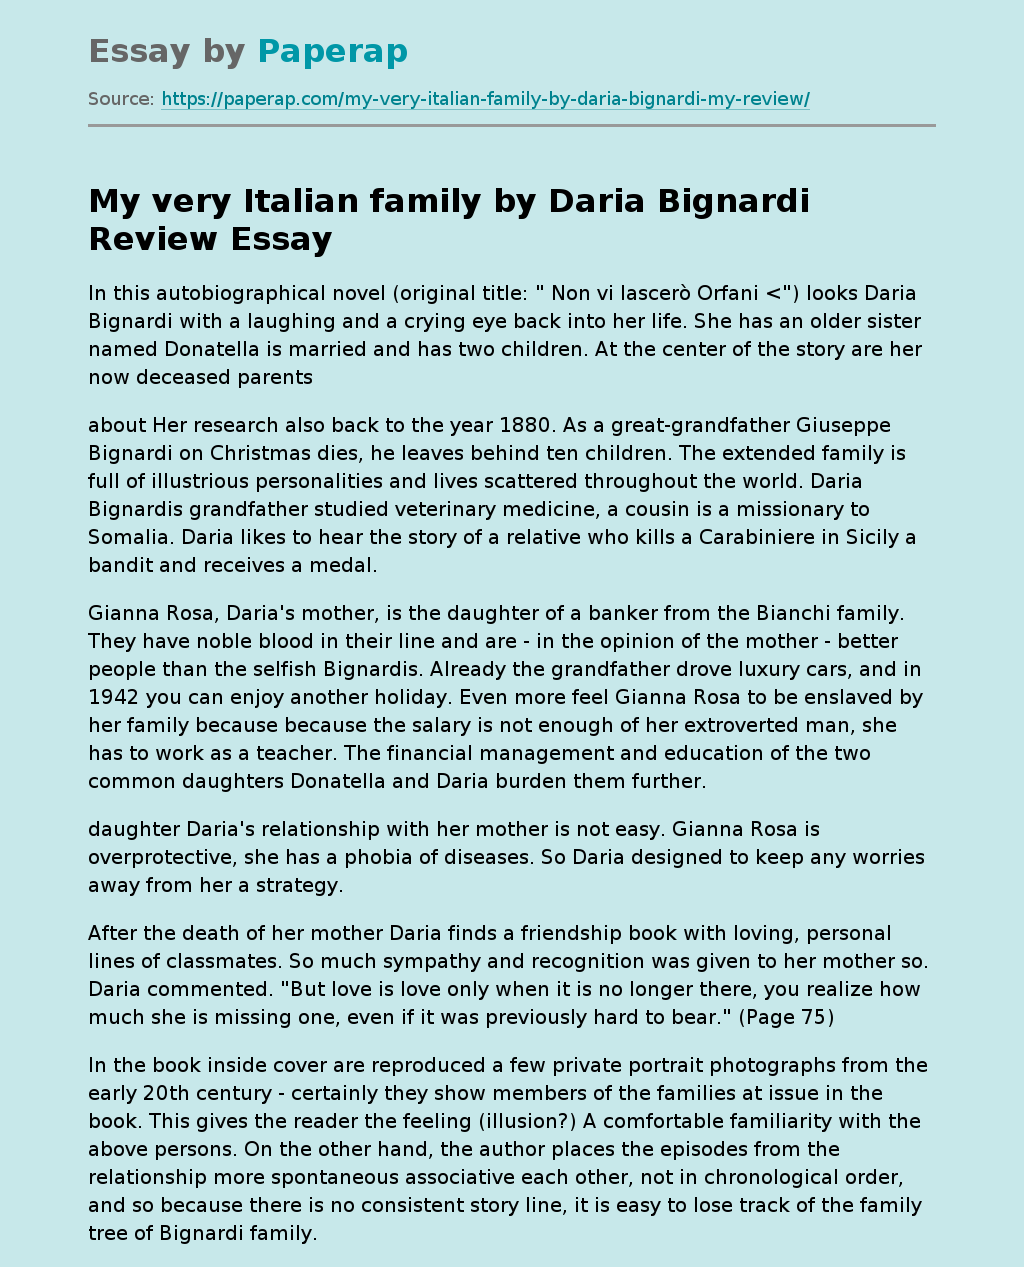 My very Italian family by Daria Bignardi Review